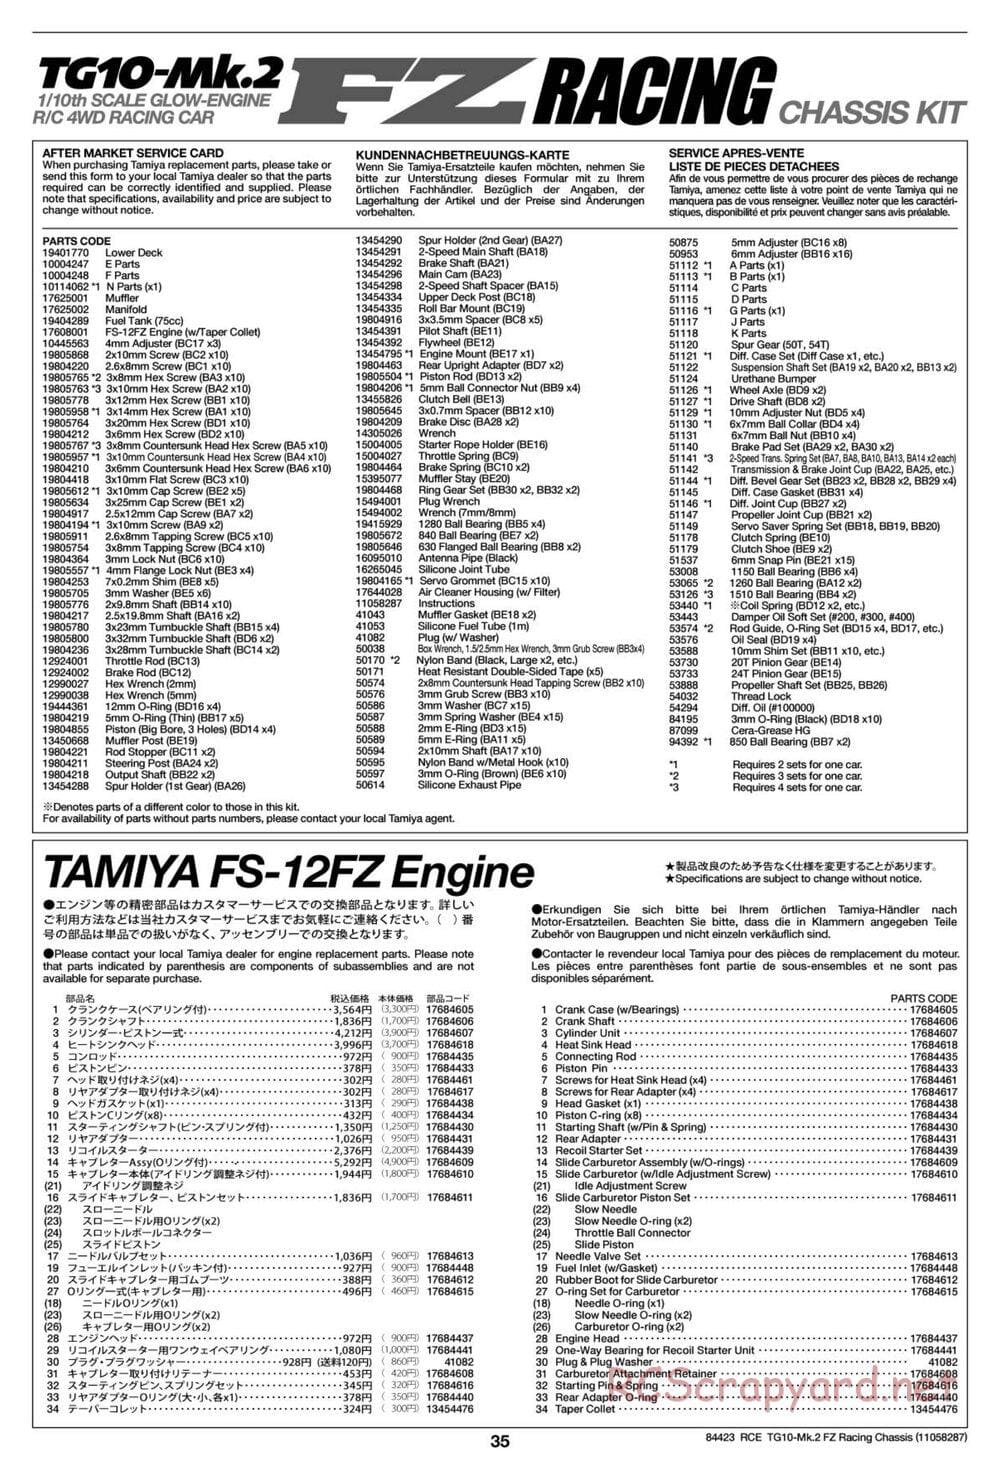 Tamiya - TG10 Mk.2 FZ Racing Chassis - Manual - Page 35